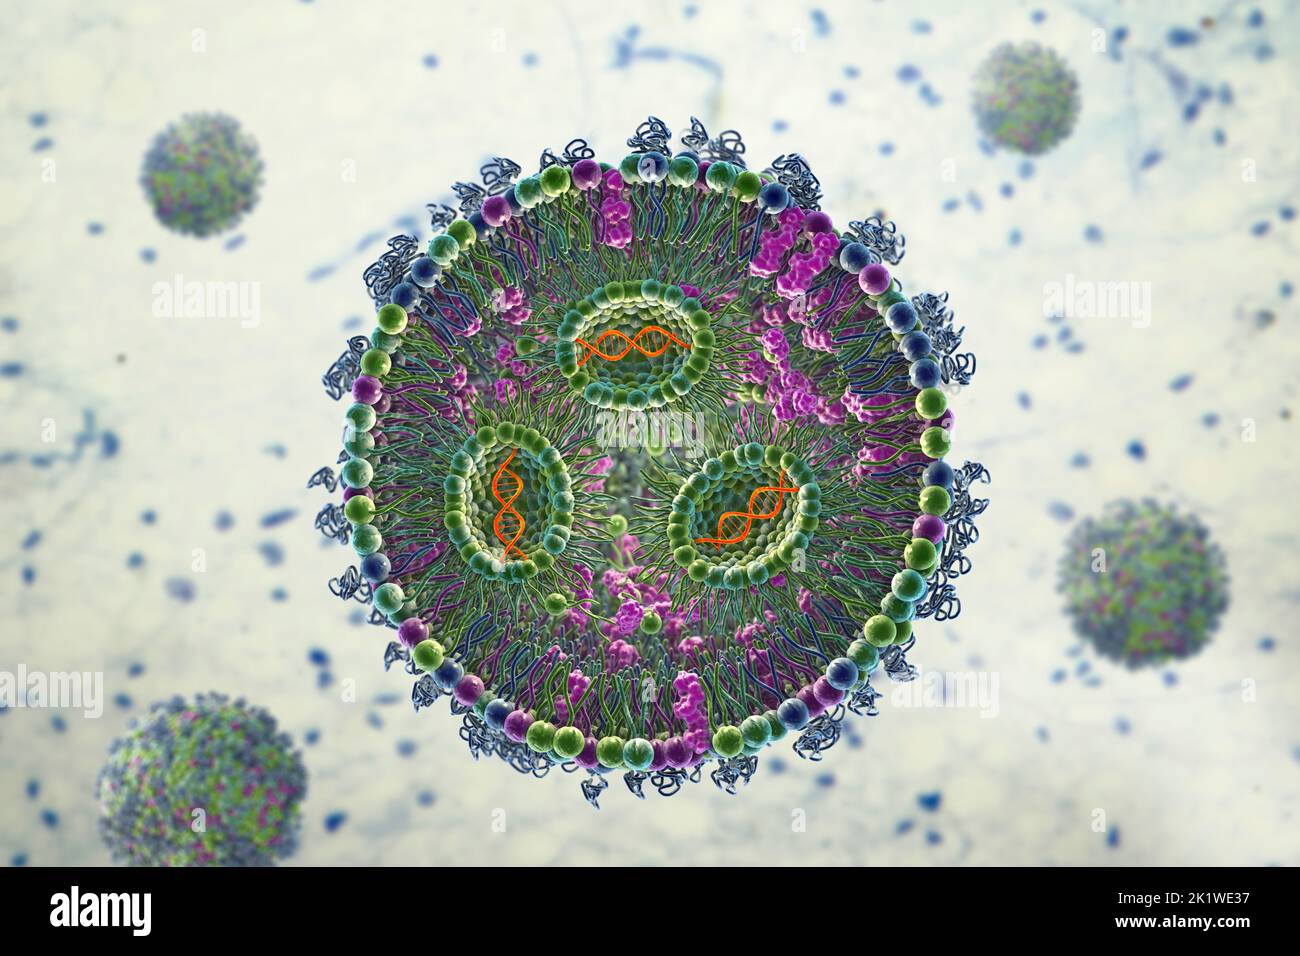 siRNA lipid nanoparticle antiviral, illustration Stock Photo